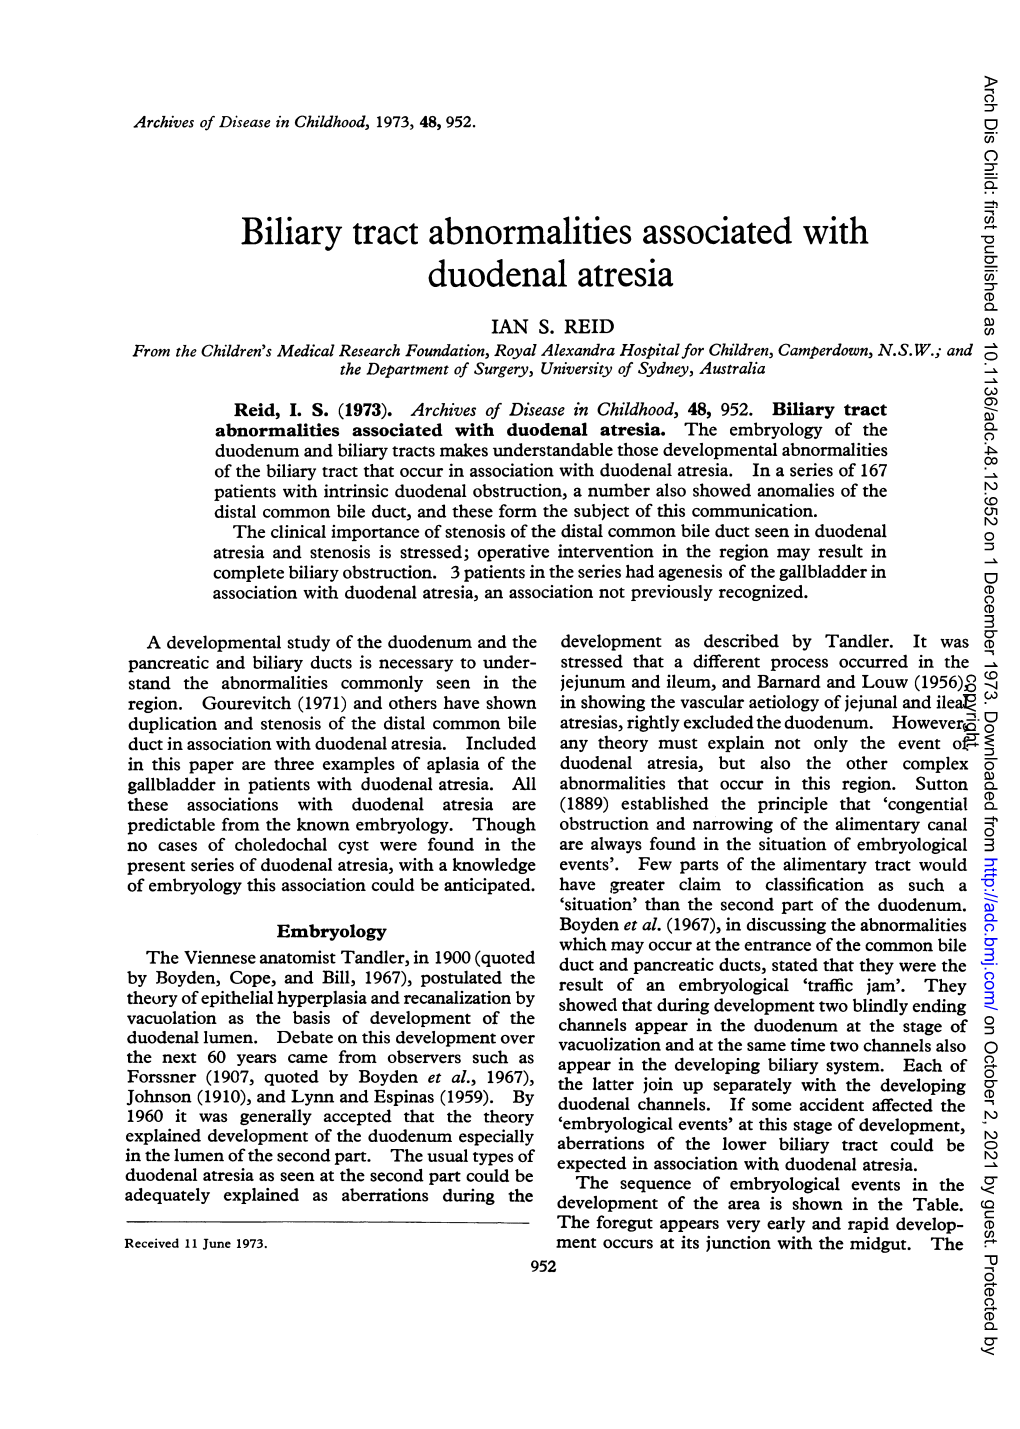 Biliary Tract Abnormalities Associated with Duodenal Atresia IAN S